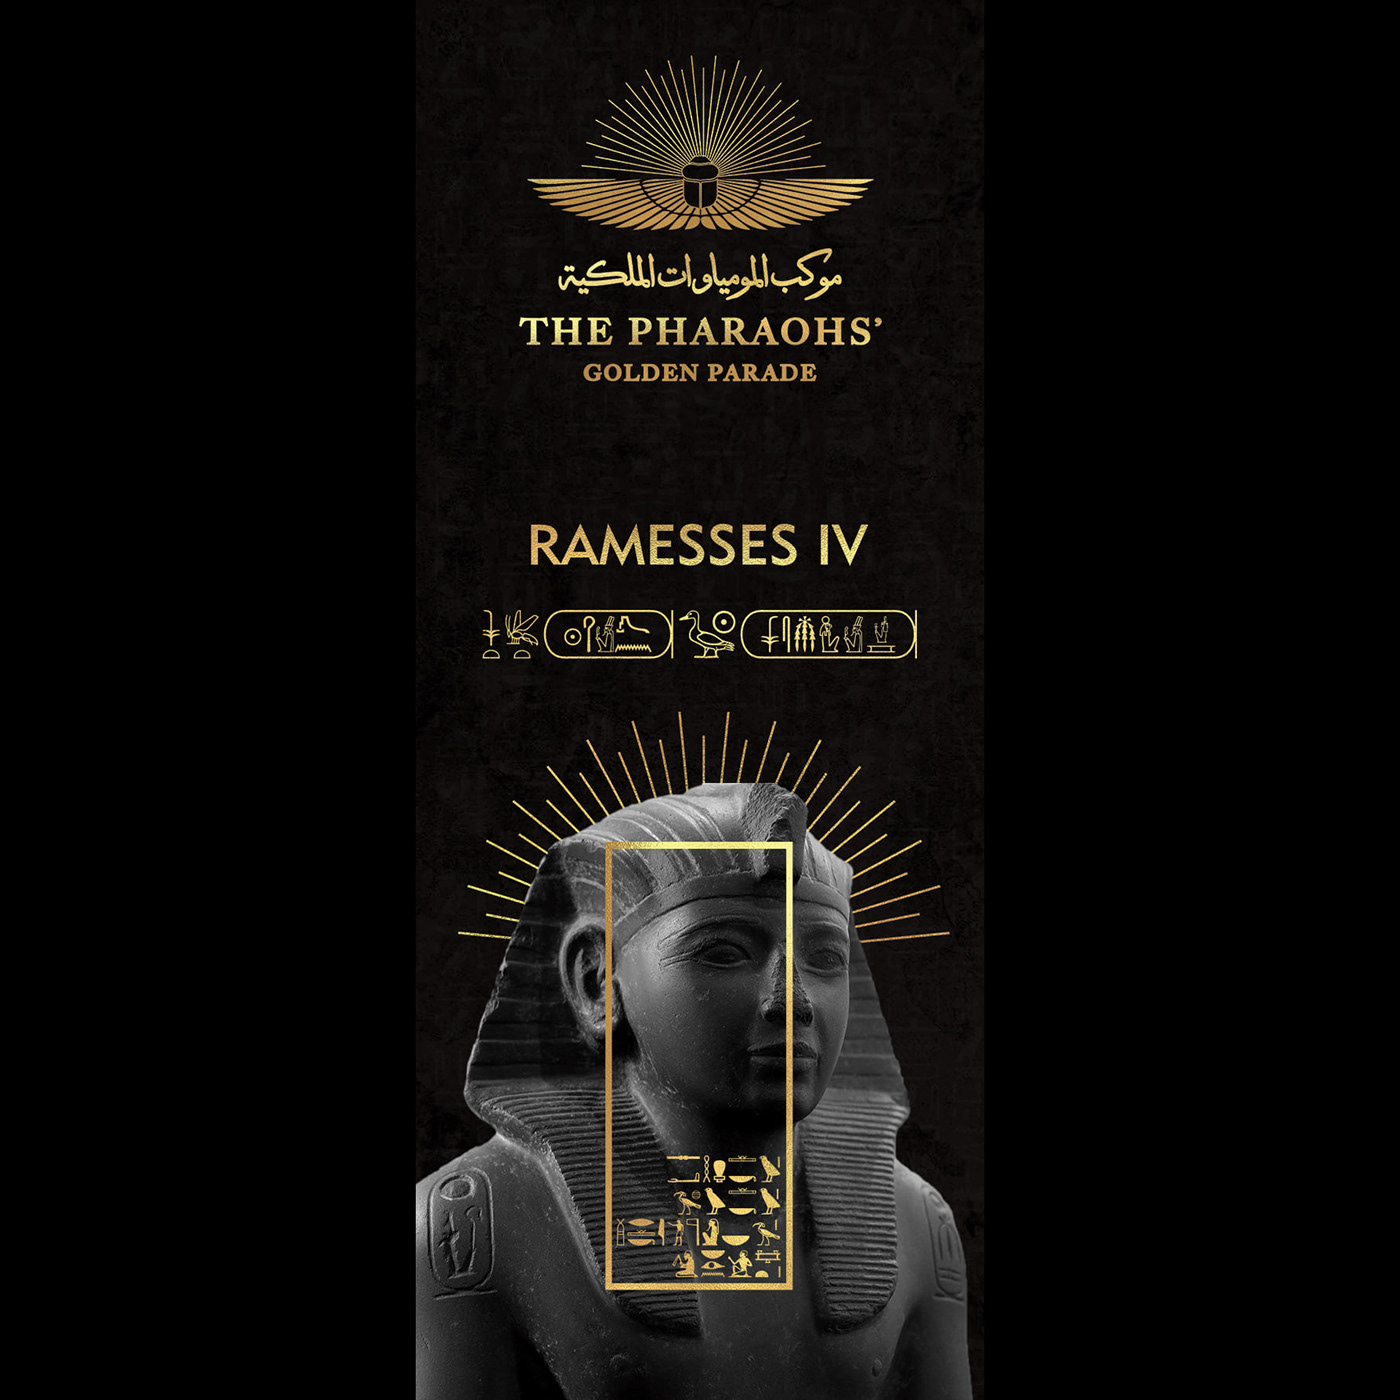 egypt Event golden parade pharaoh